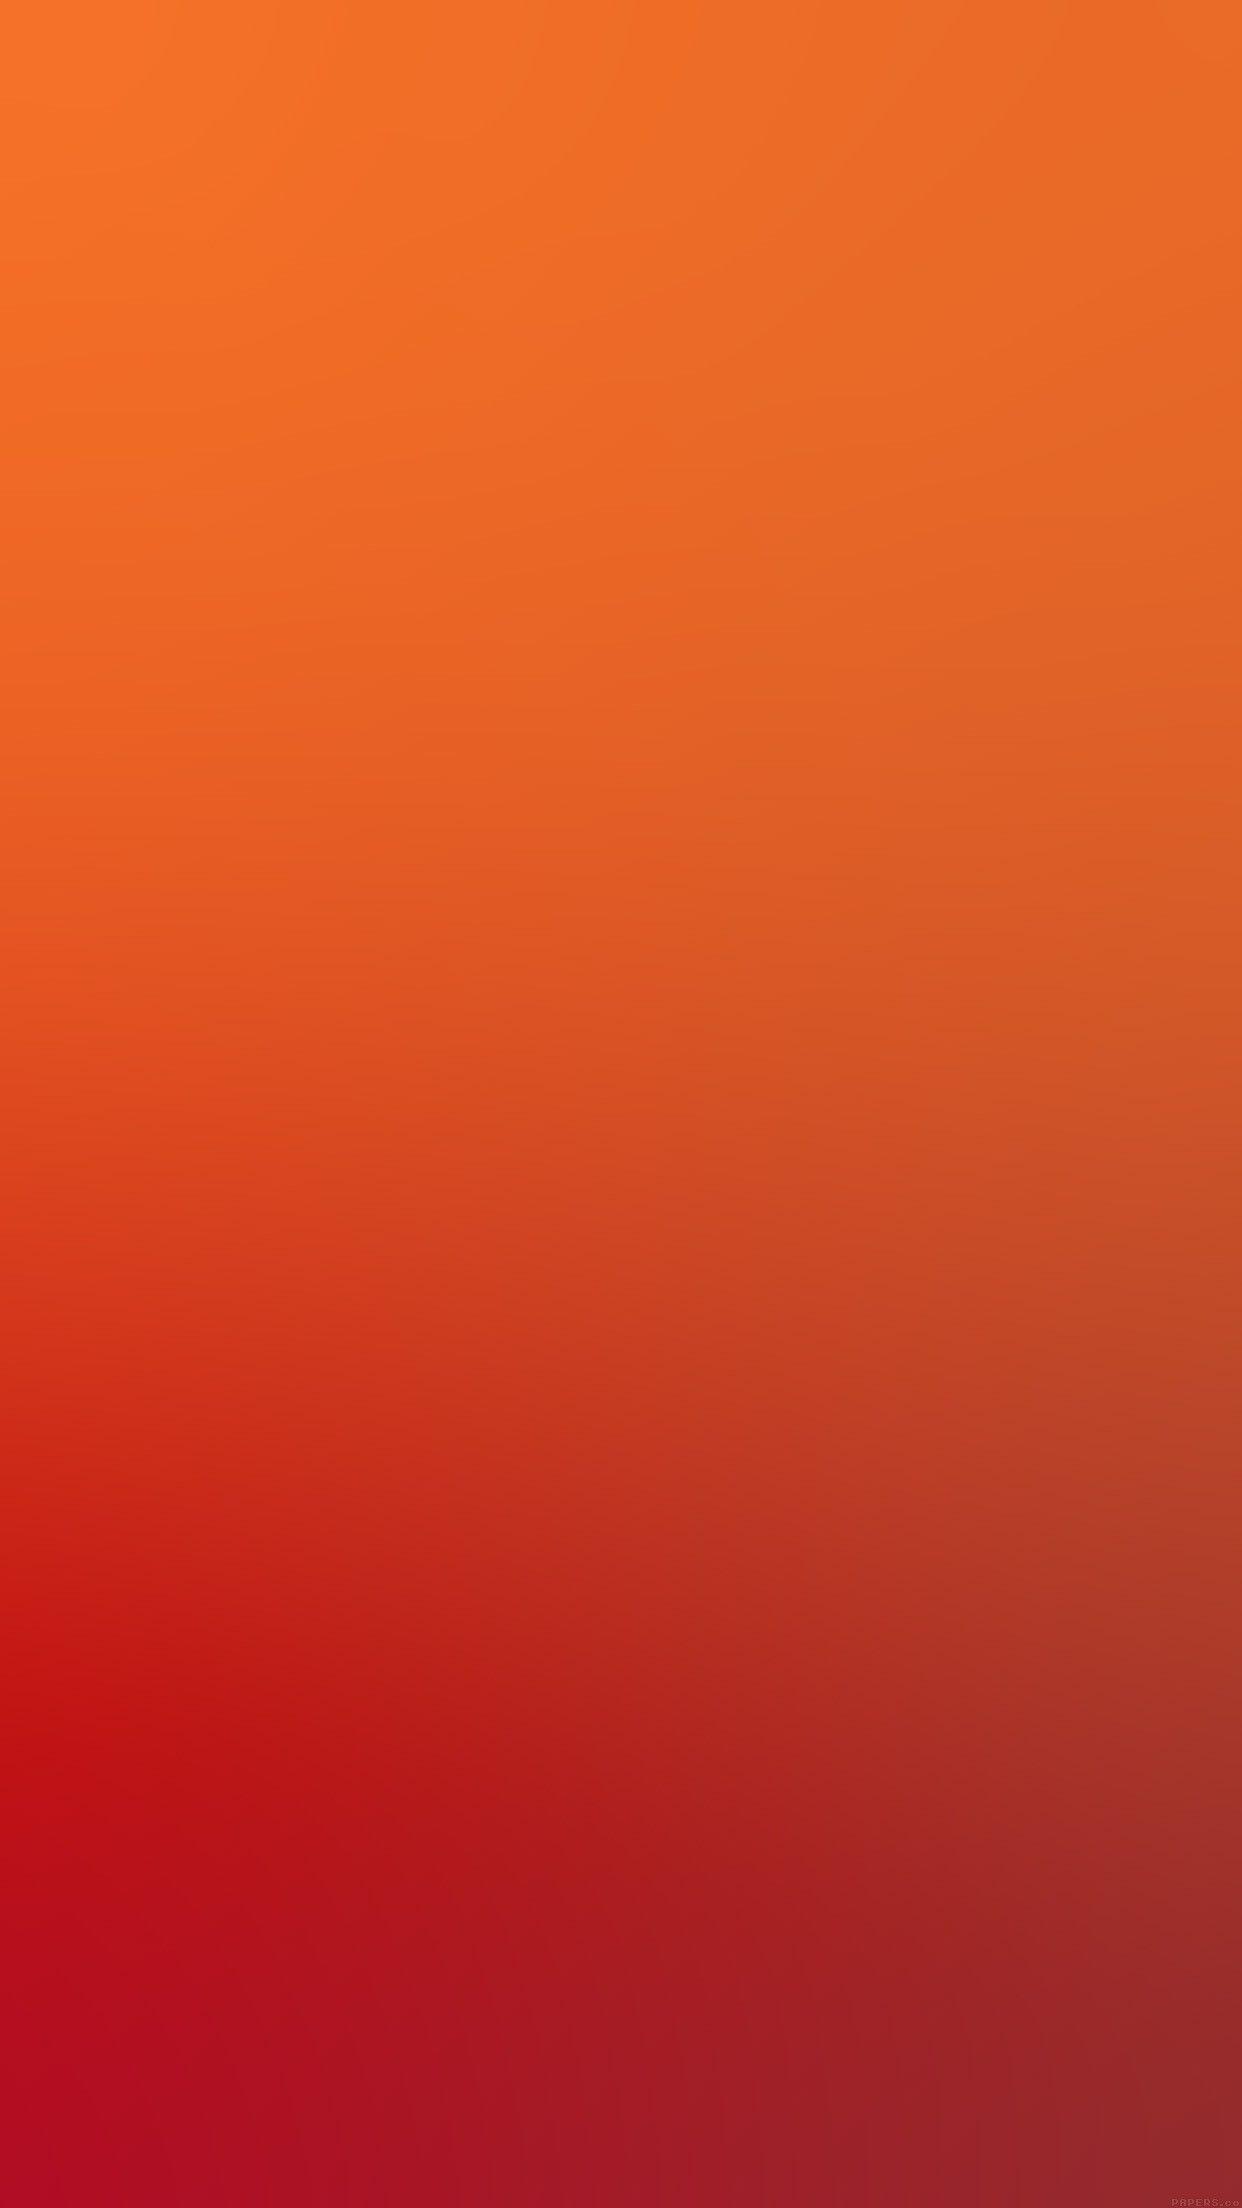 Earth Shiny Orange iPhone Wallpaper Full HD  Download 